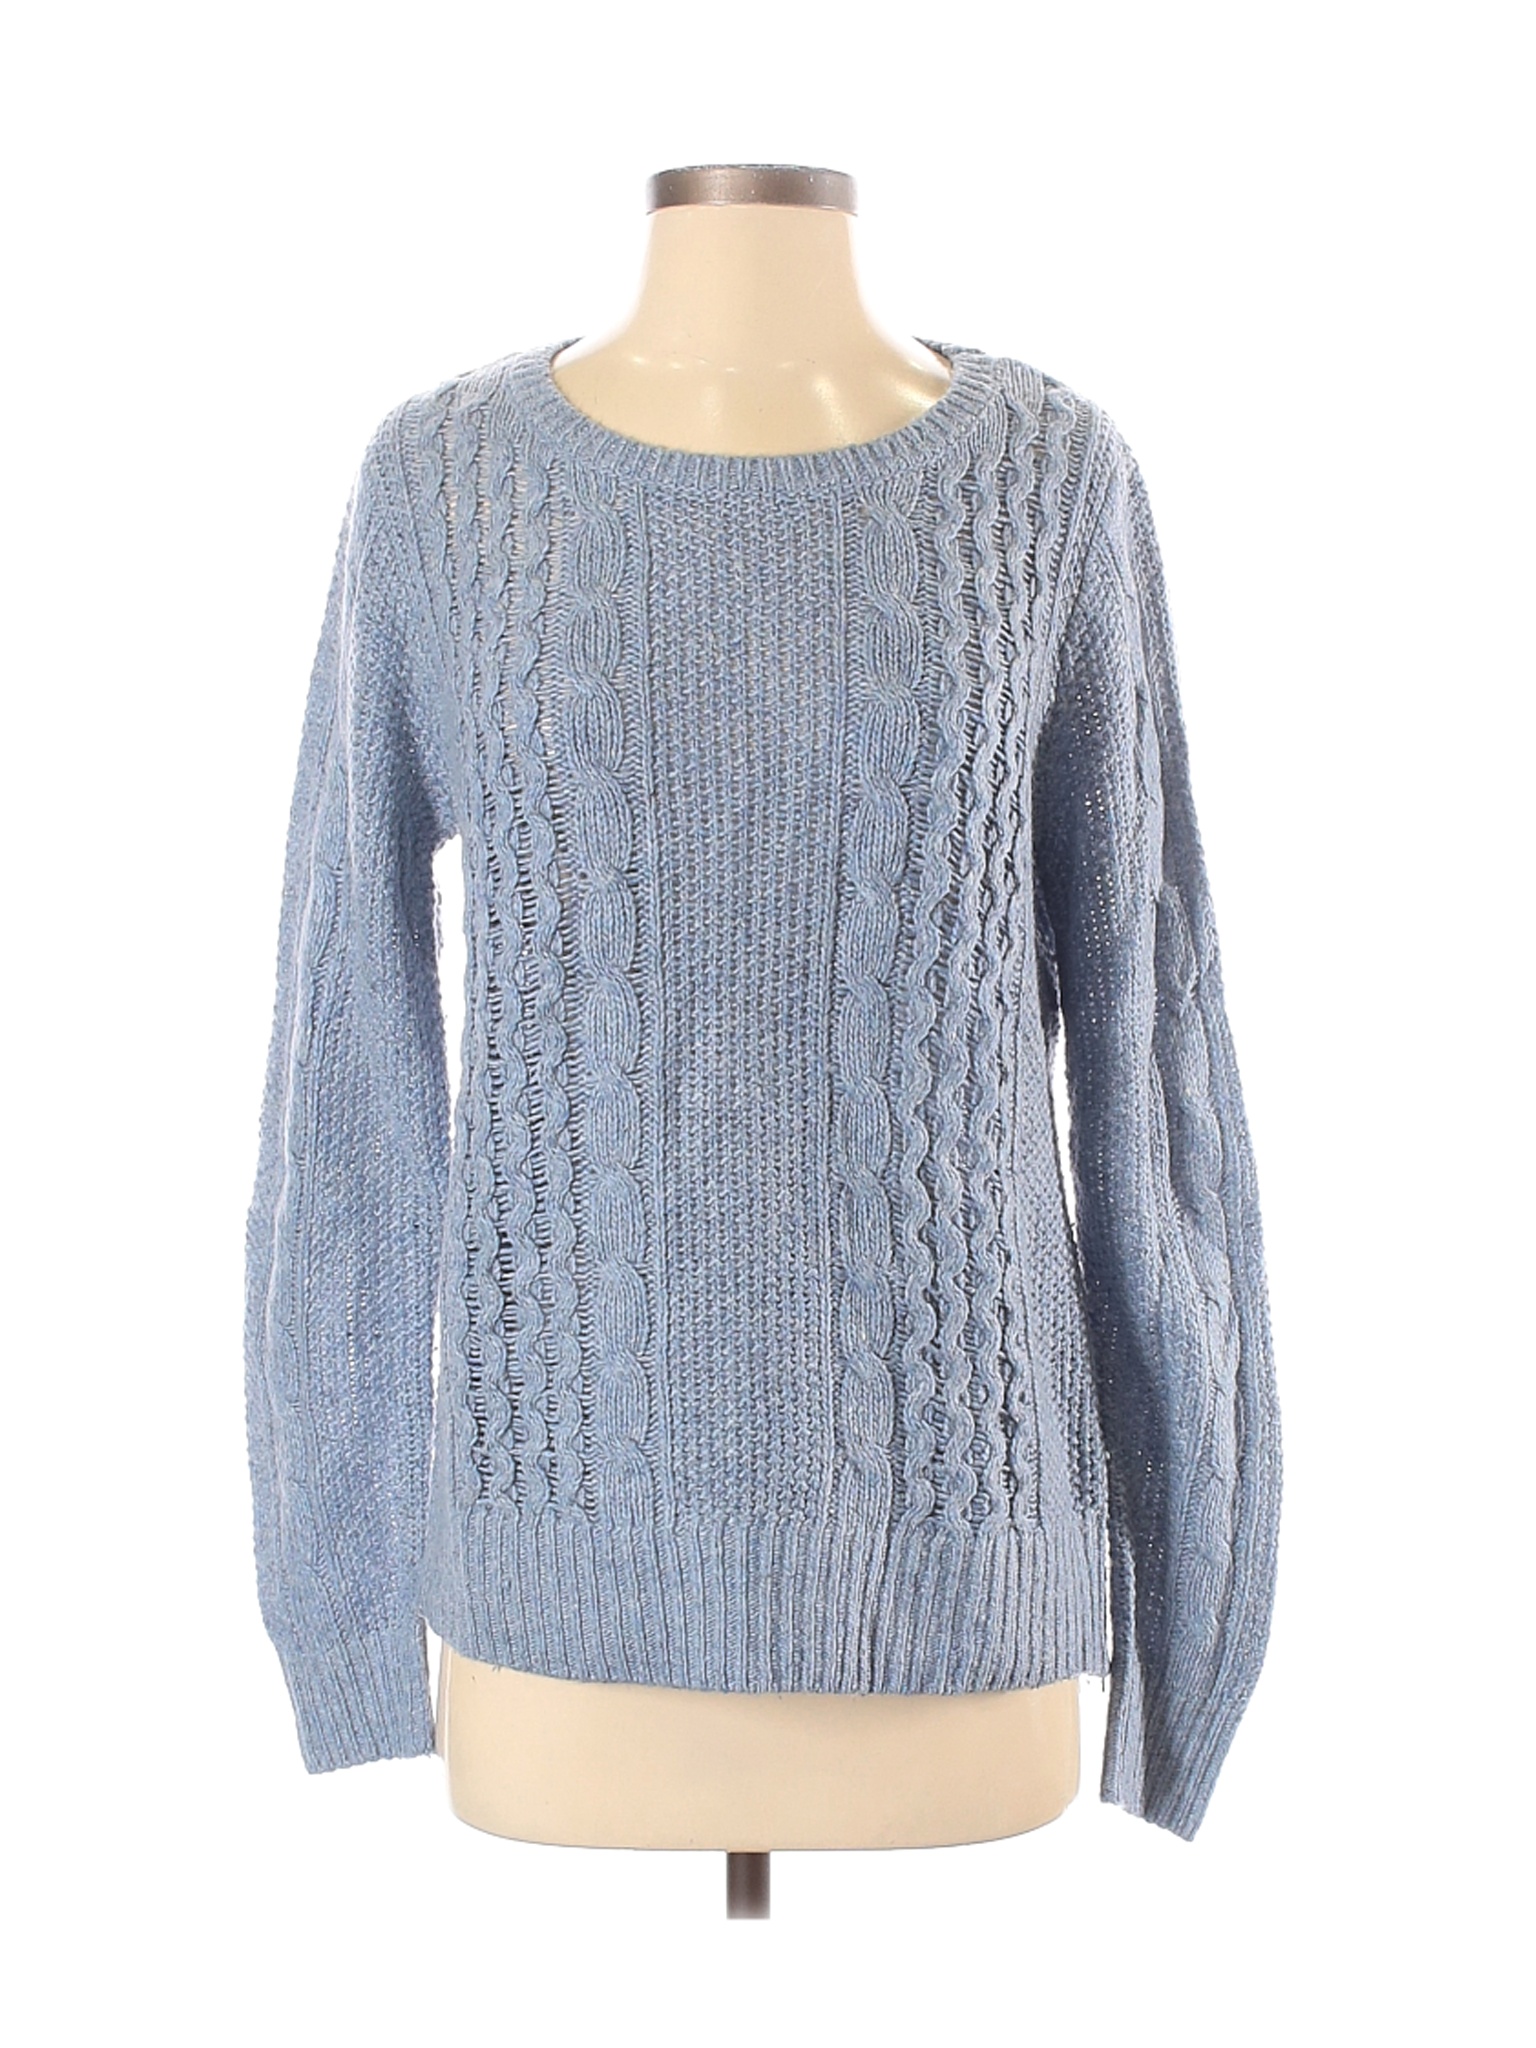 Banana Republic Factory Store Women Blue Pullover Sweater S | eBay